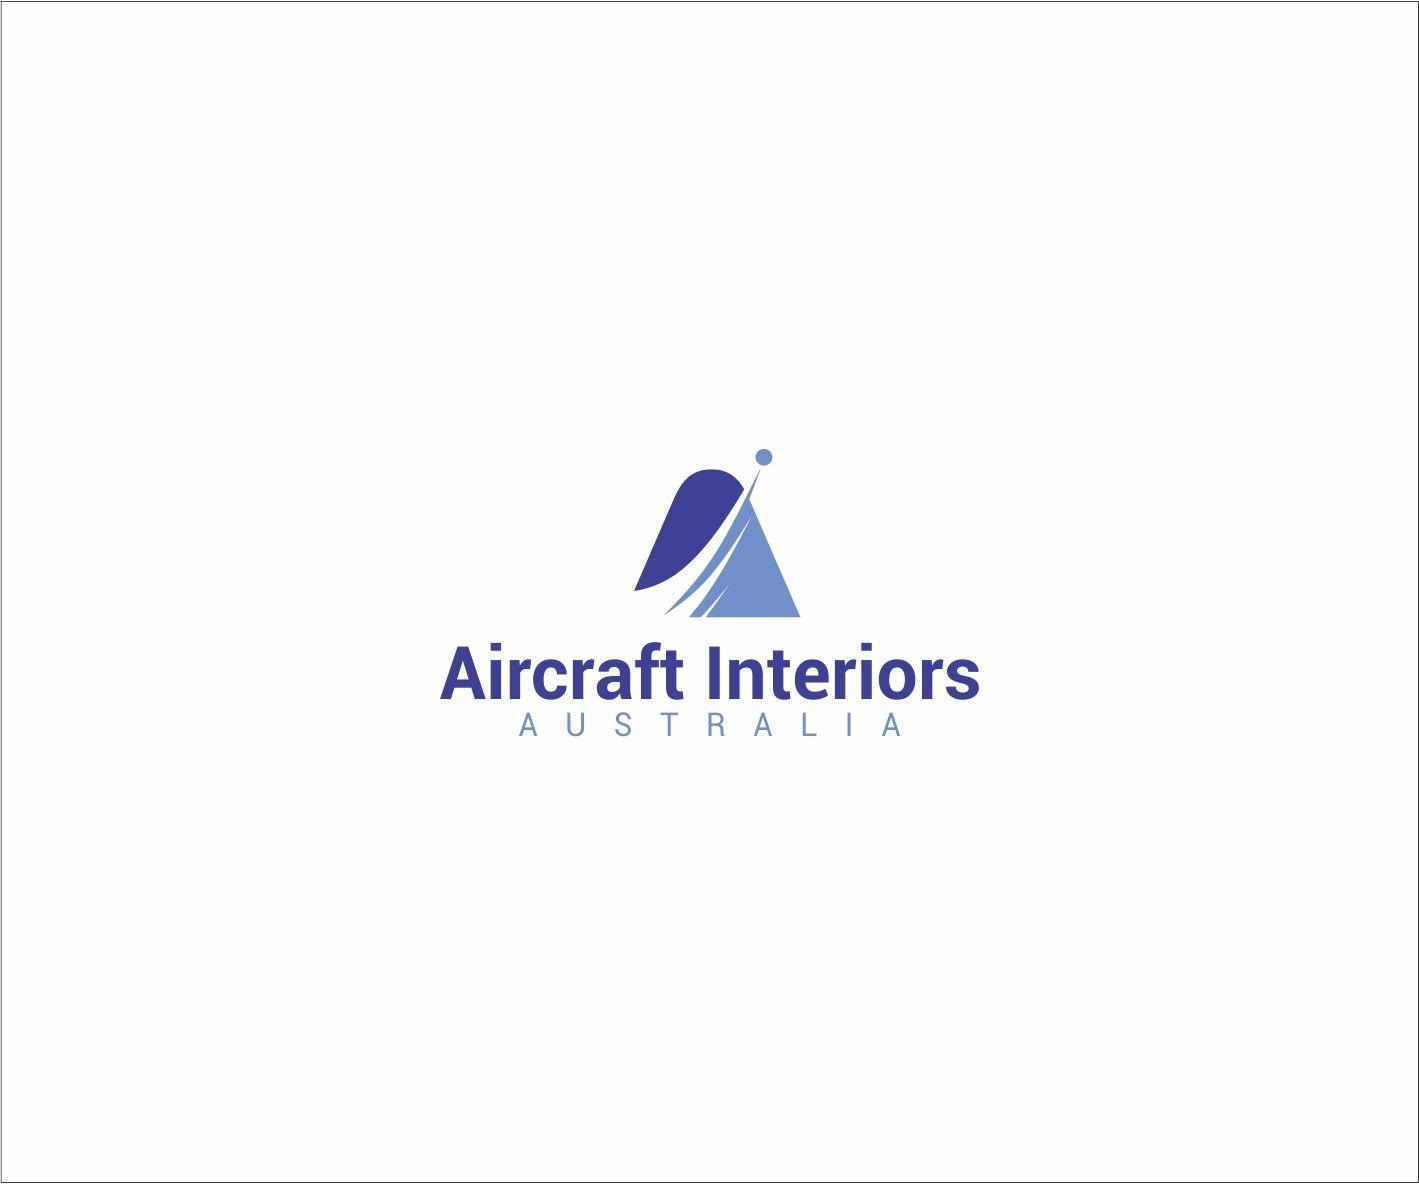 Aircraft Company Logo - Professional, Serious, It Company Logo Design for Aircraft Interiors